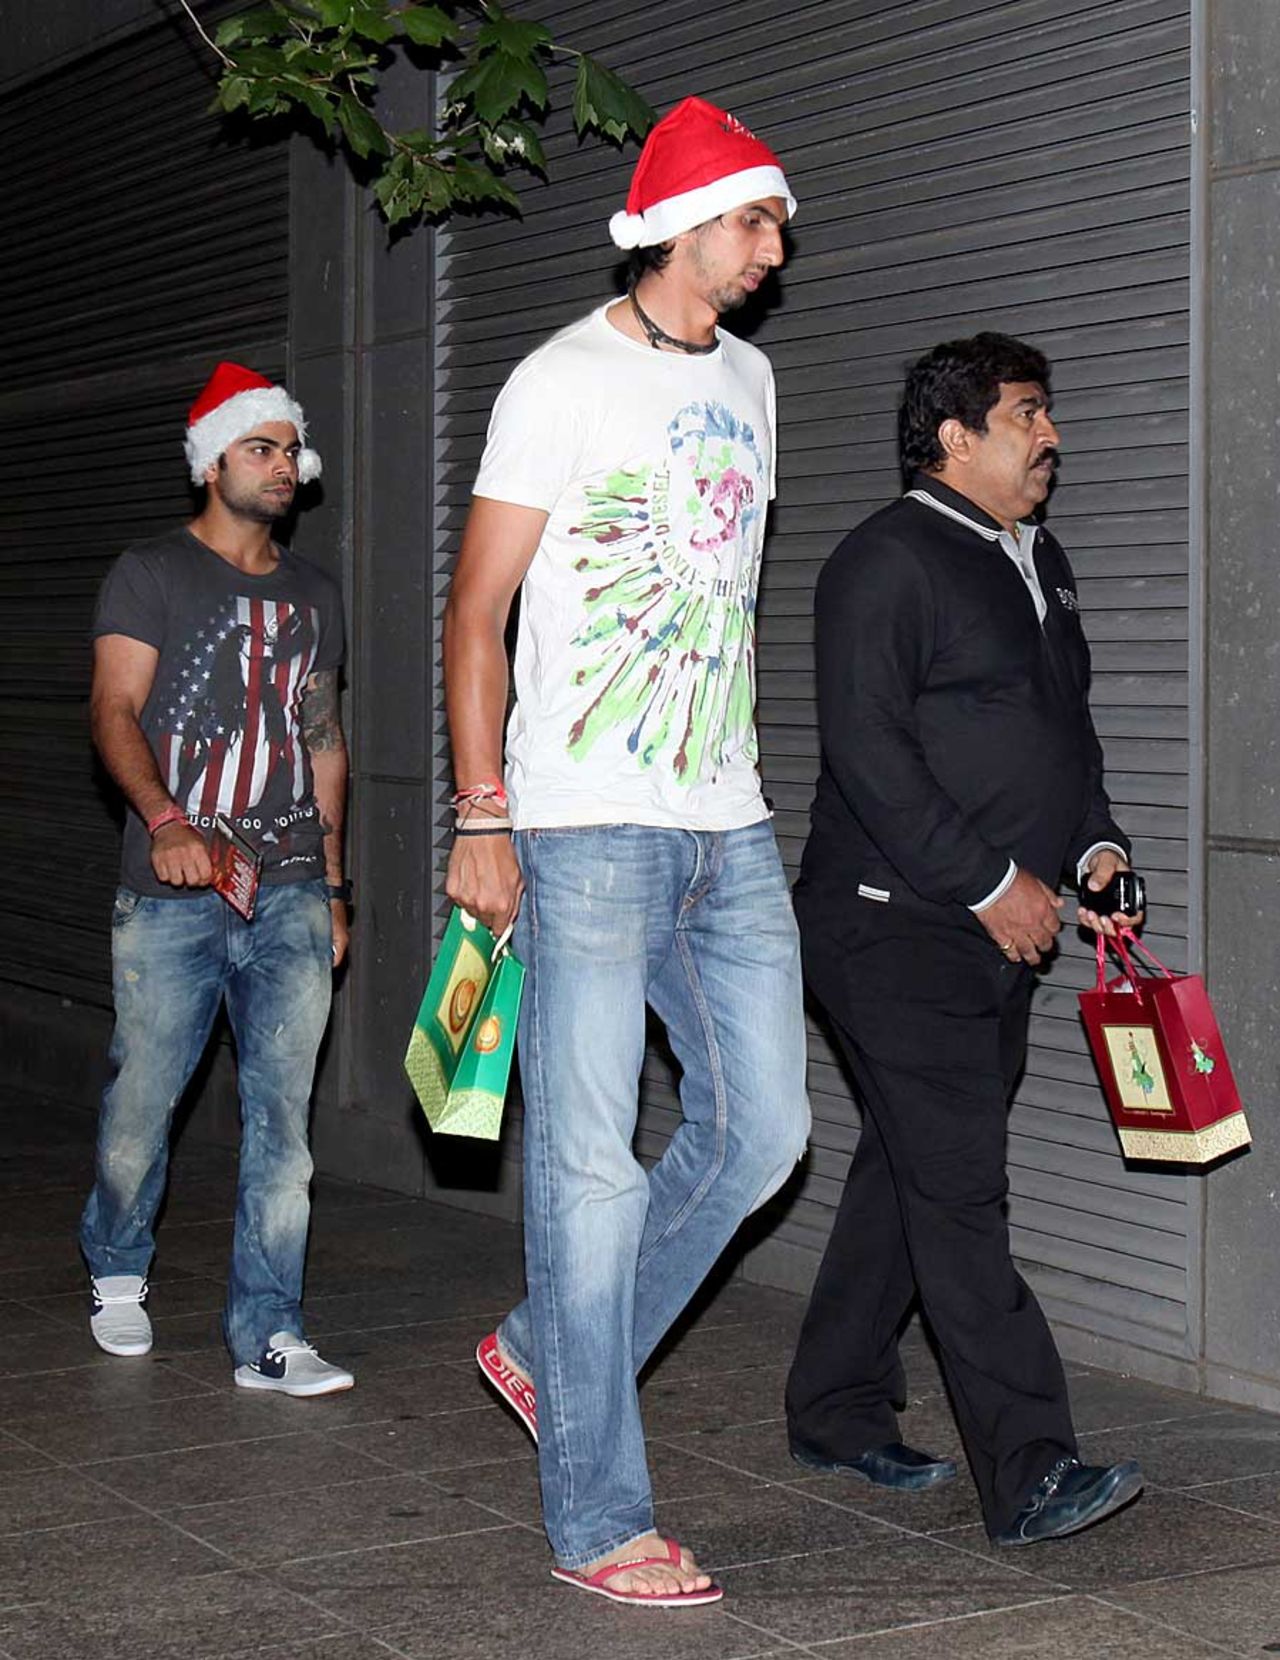 Virat Kohli and Ishant Sharma take a walk with their Santa hats on, Melbourne, December 24, 2011